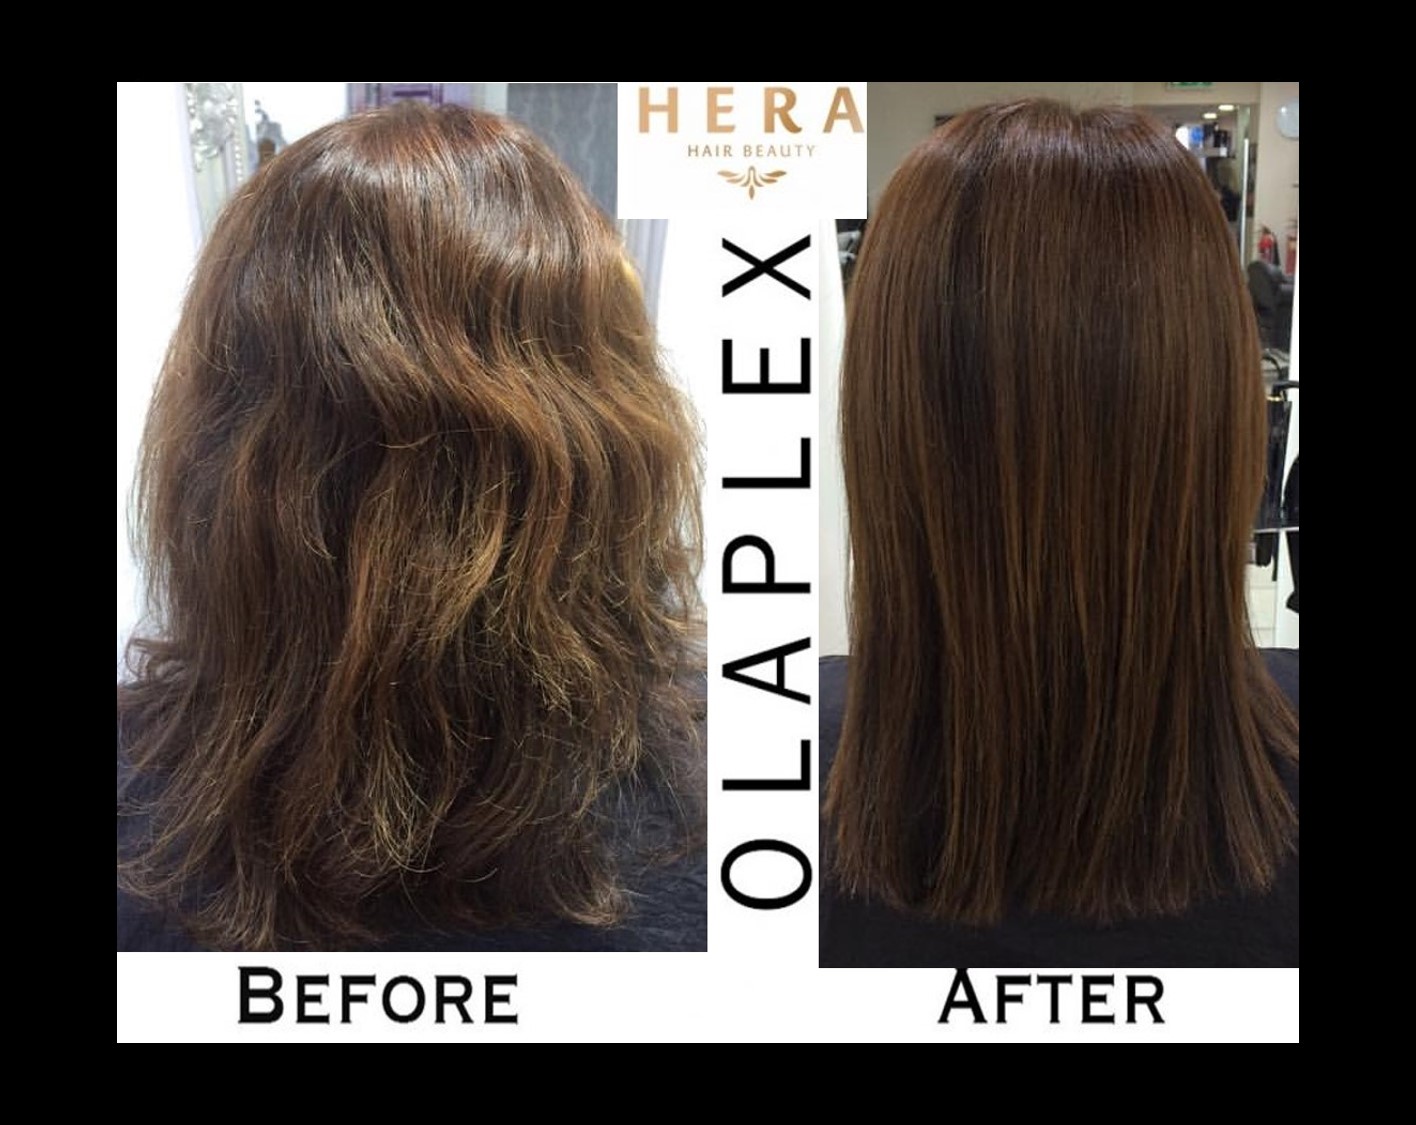 Is it True that Olaplex is Causing your Hair to Break? | Hera Hair Beauty